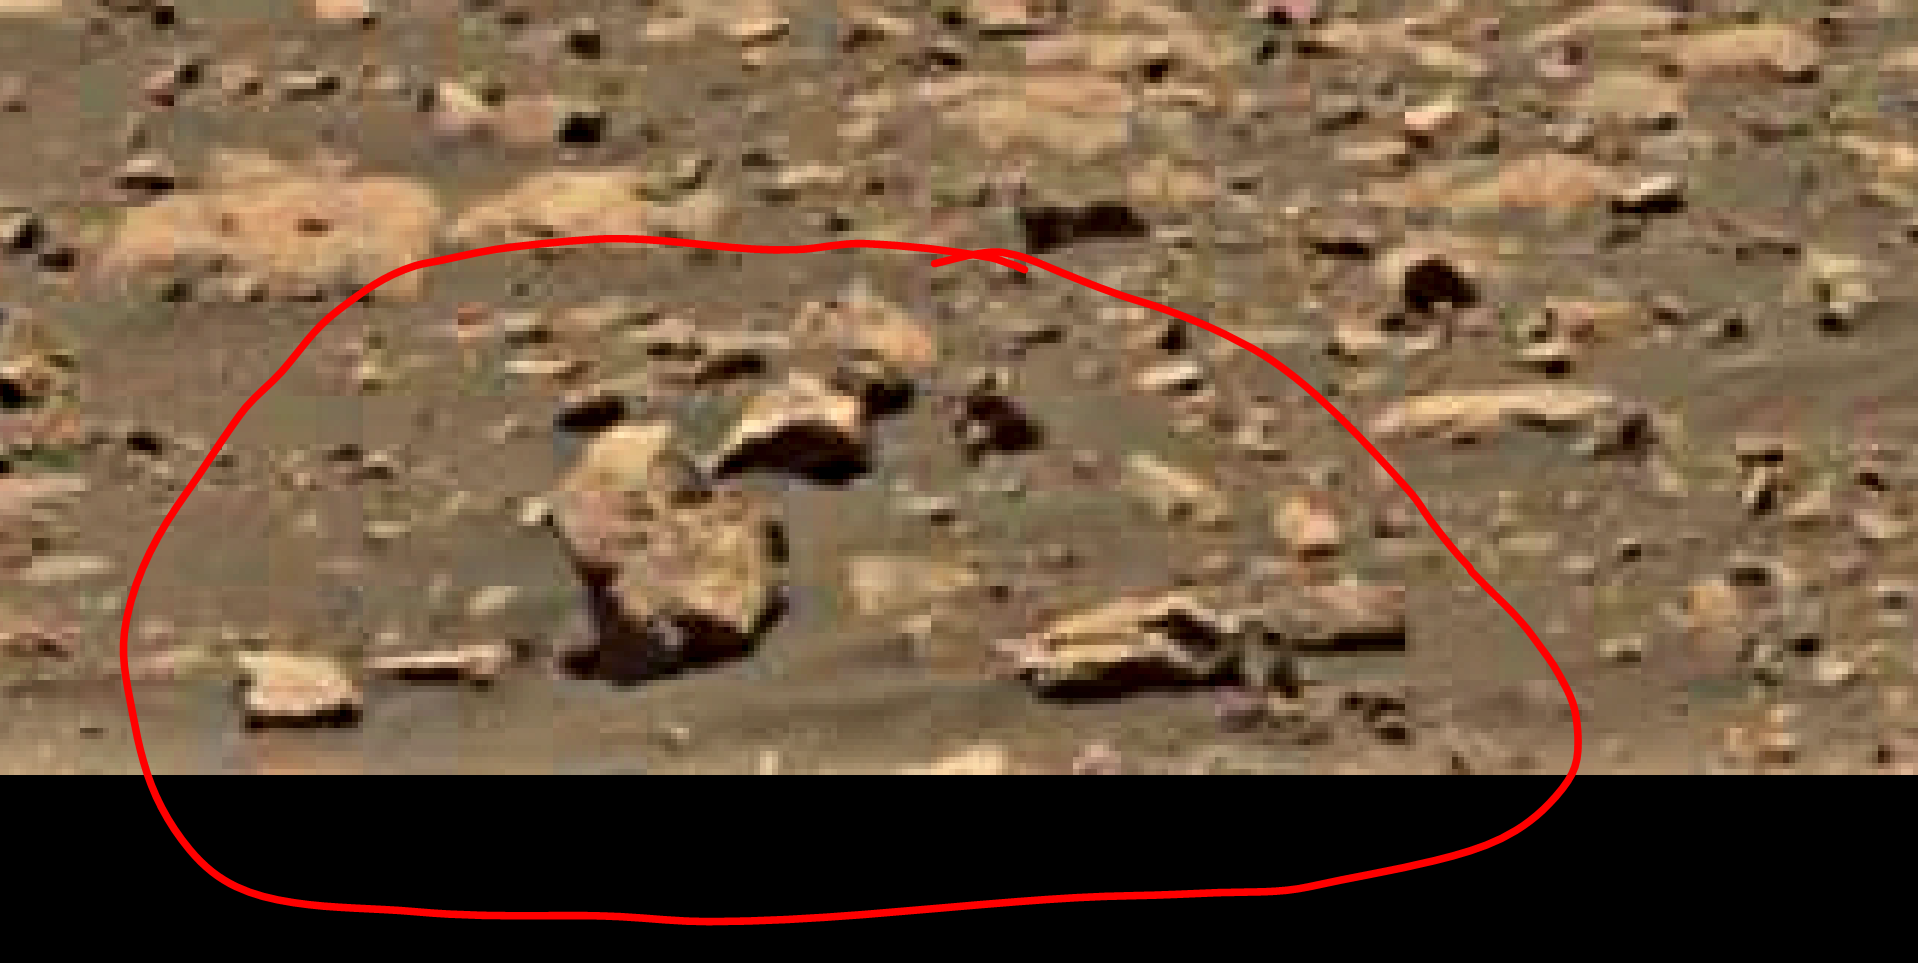 Mars anomalies - alien head